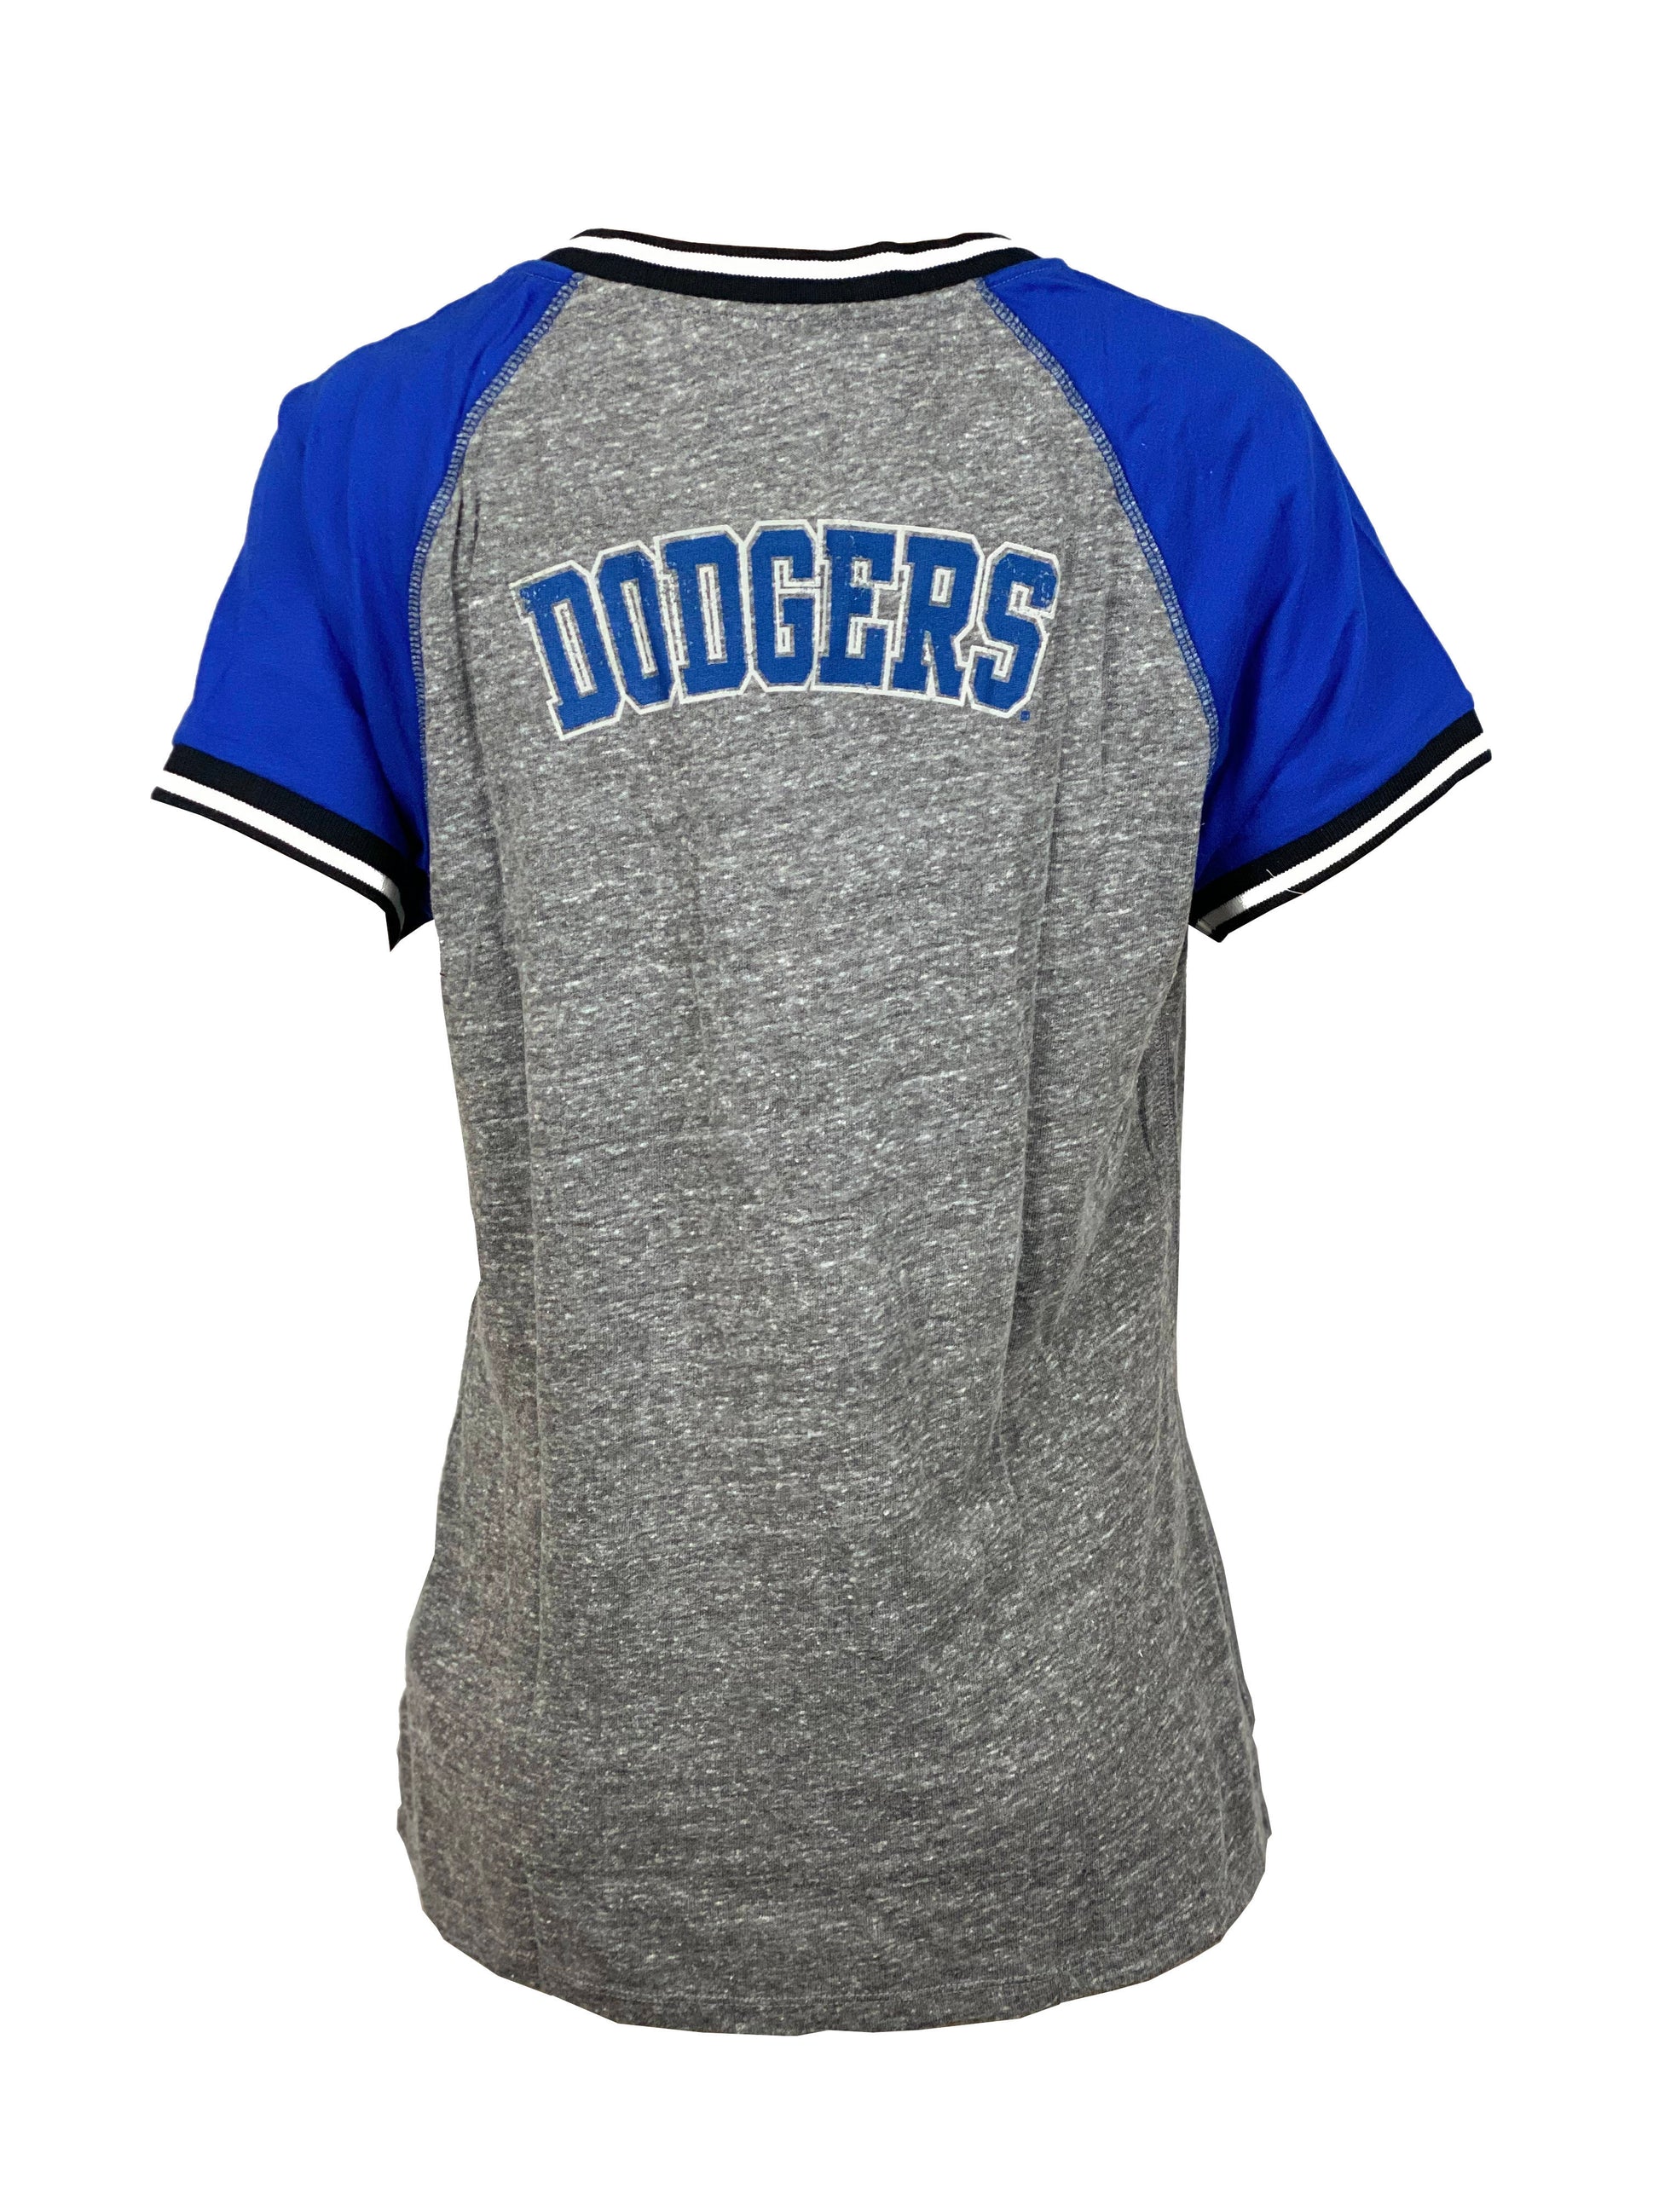 MLB Los Angeles Dodgers Women's Short Sleeve V-Neck T-Shirt - S